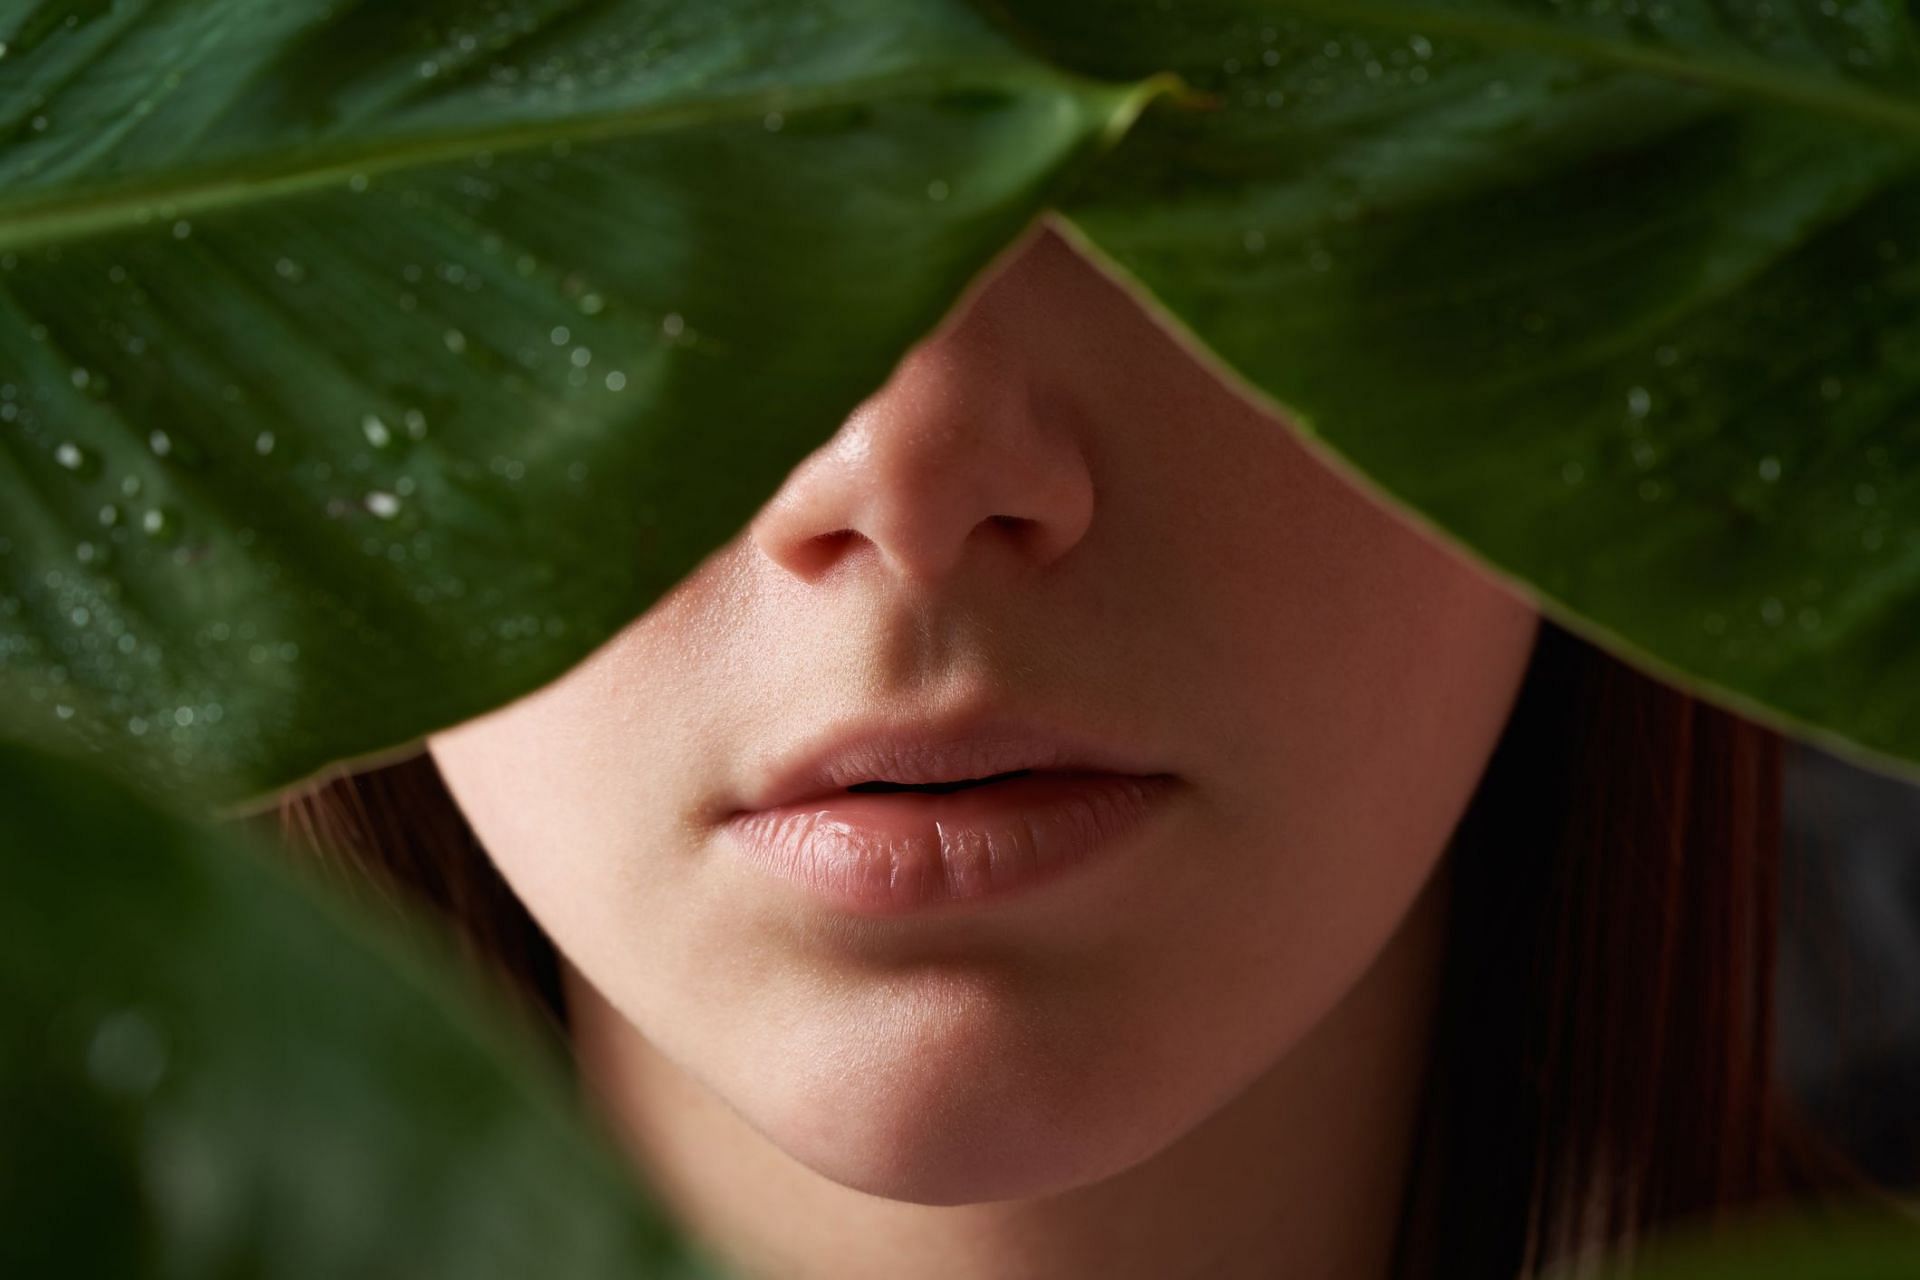 Home remedies for Darker Lips (Image via Getty Images/Radka Janouskovcova)